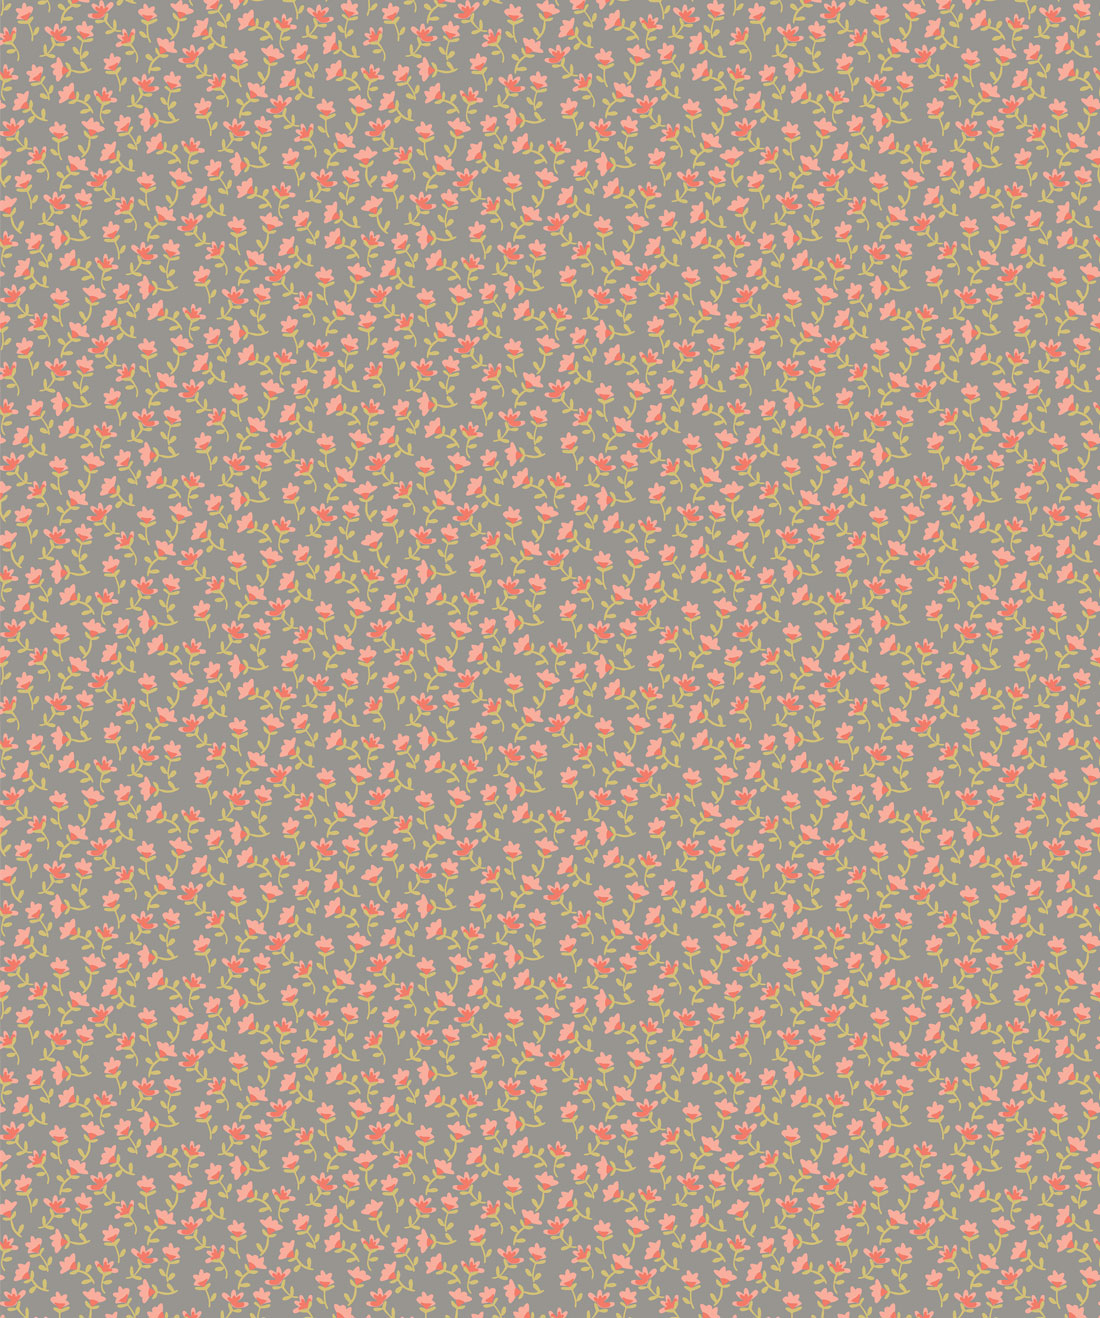 Download Gucci Pattern Striped Art Wallpaper